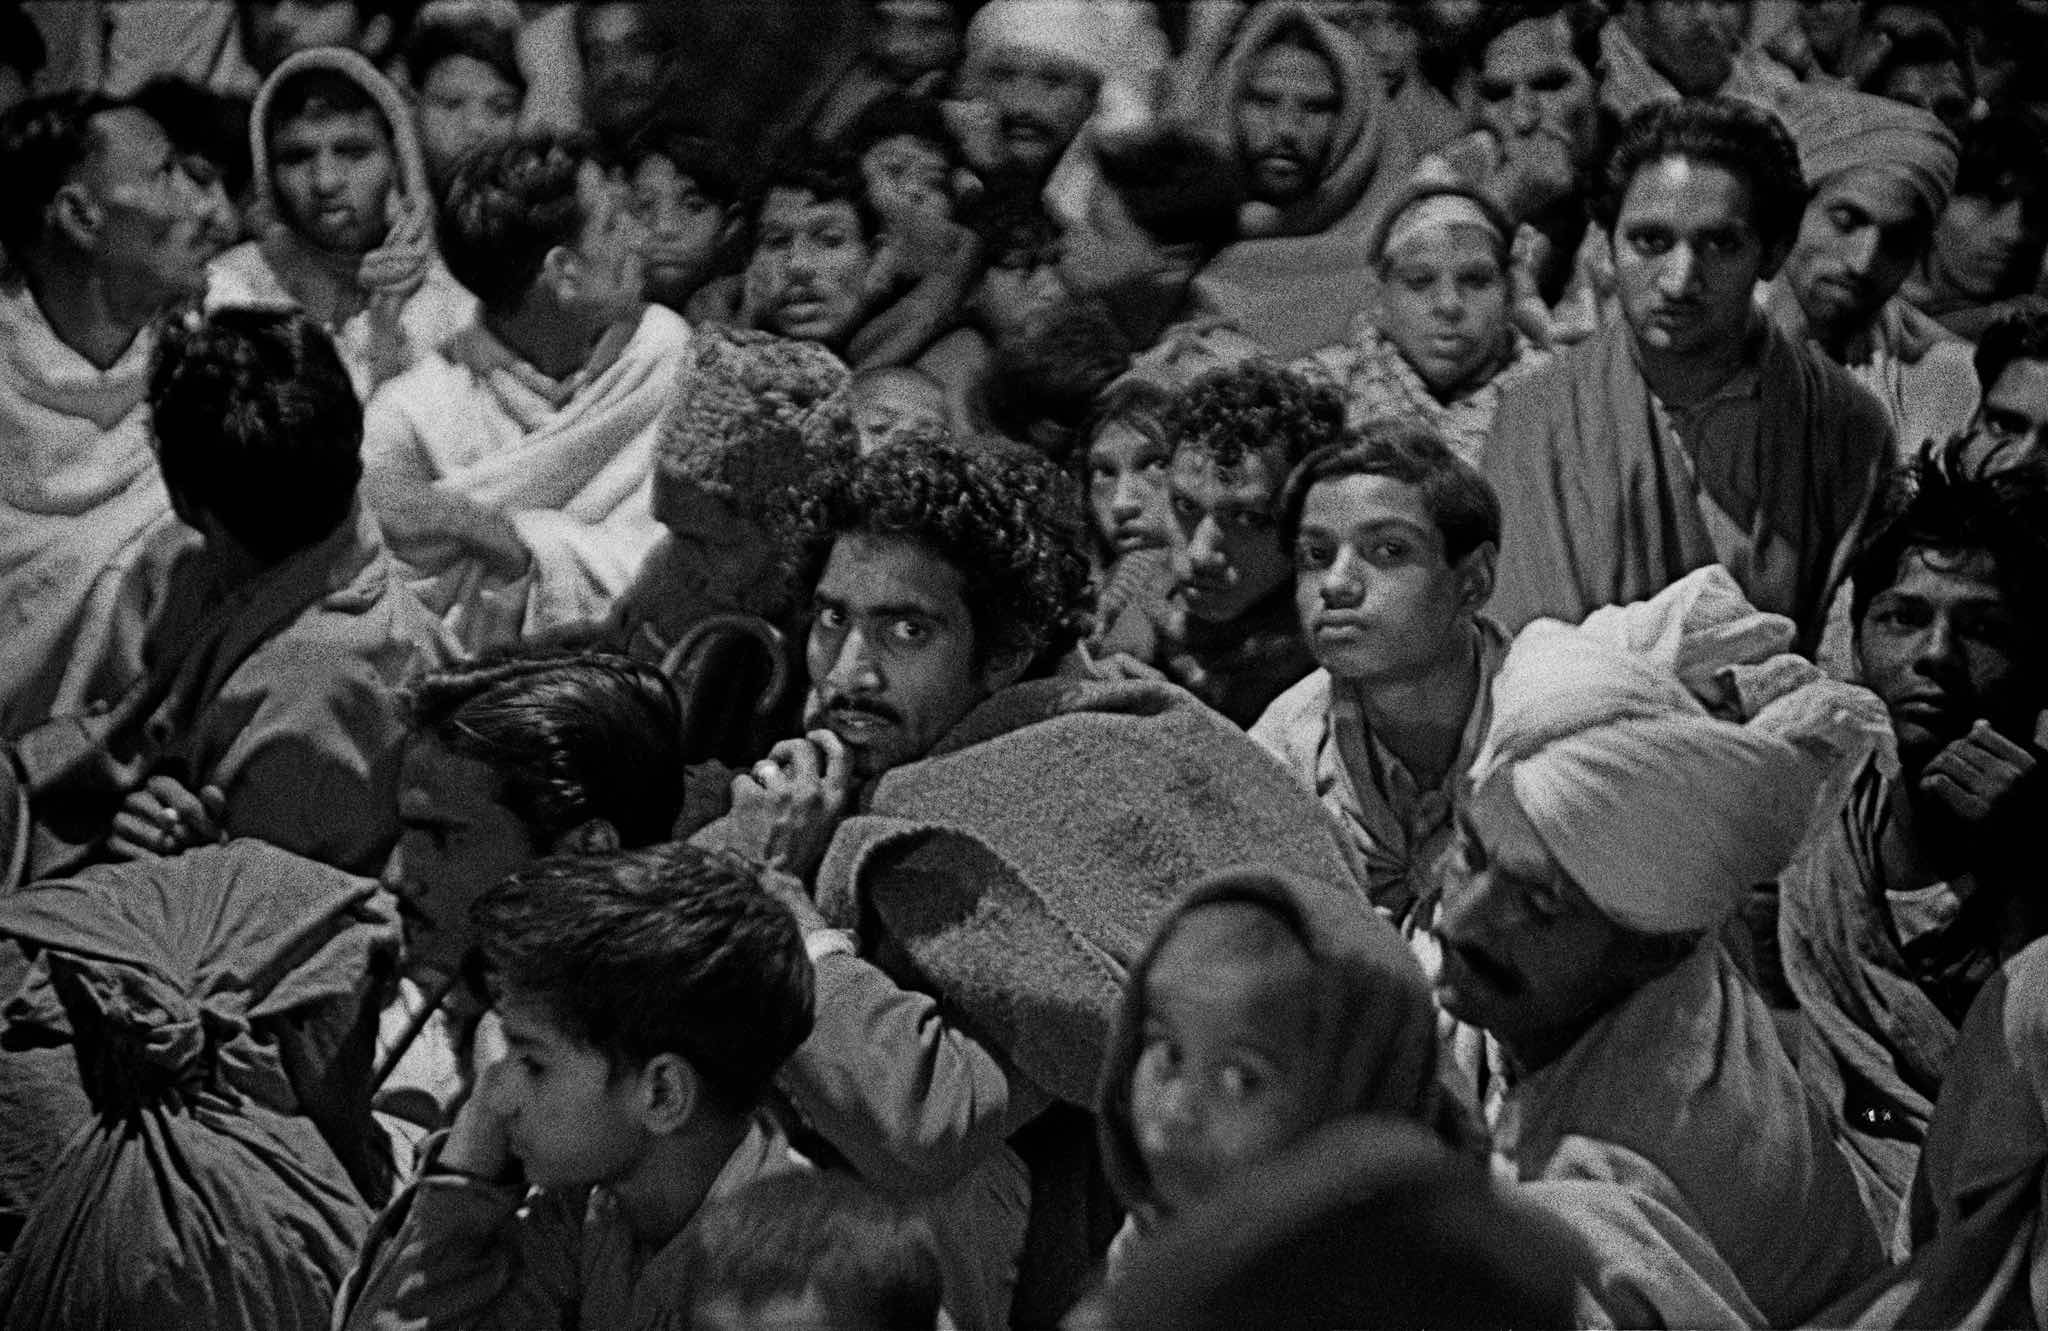 1952, Lahore, Pakistan, Heera Mandi (the red light area) crowd